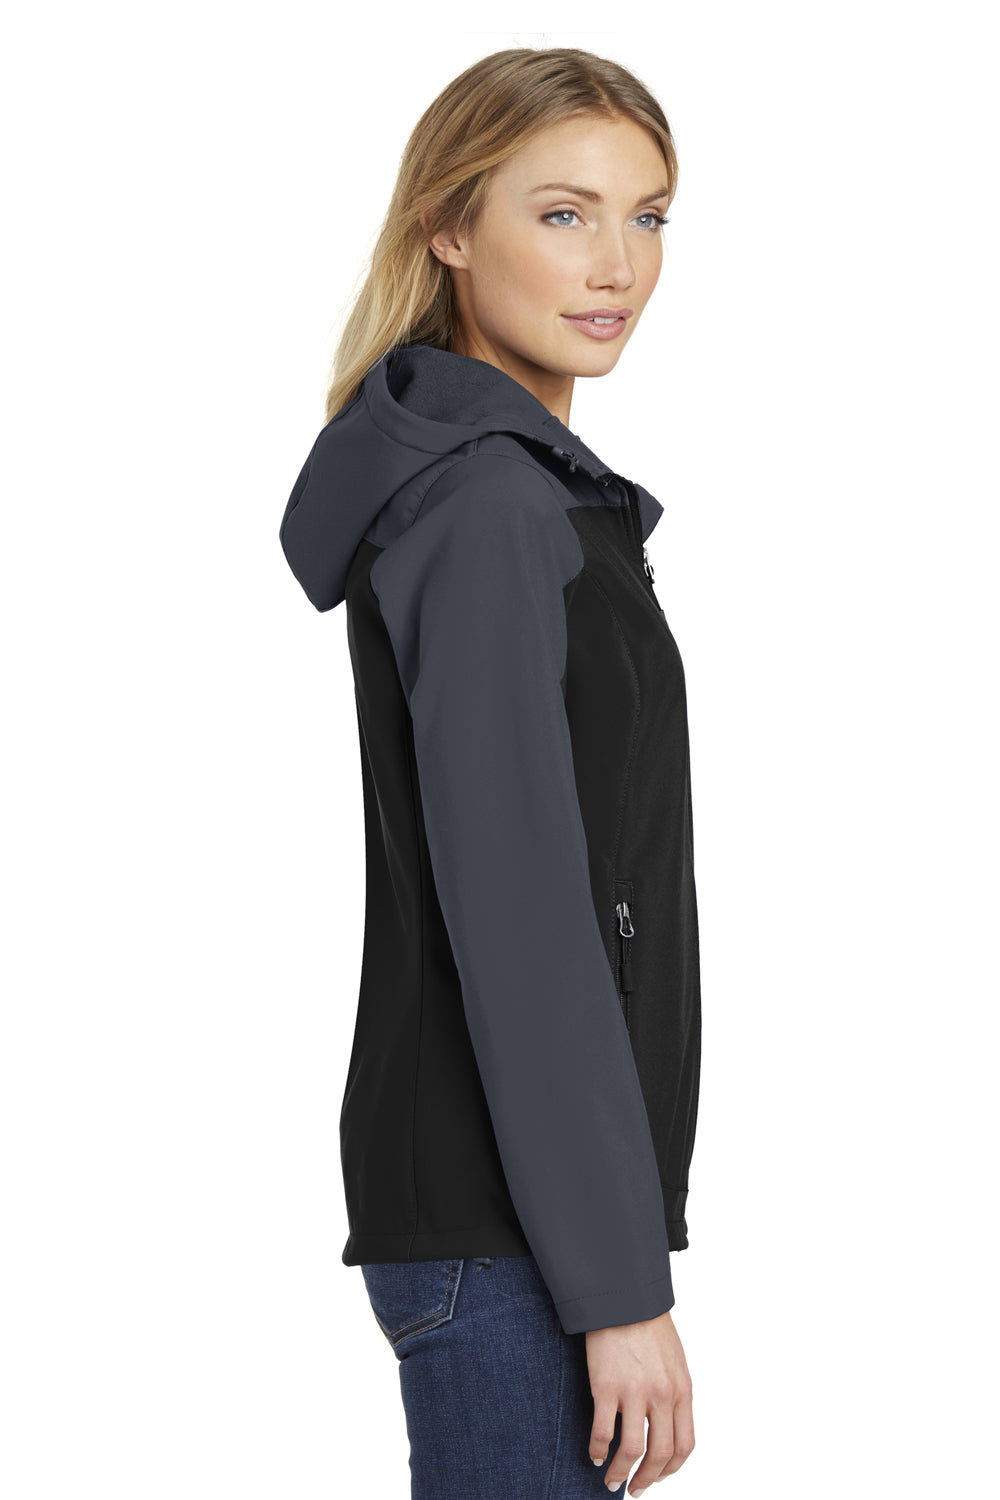 Port Authority L335 Womens Core Wind & Water Resistant Full Zip Hooded Jacket Black/Grey Side